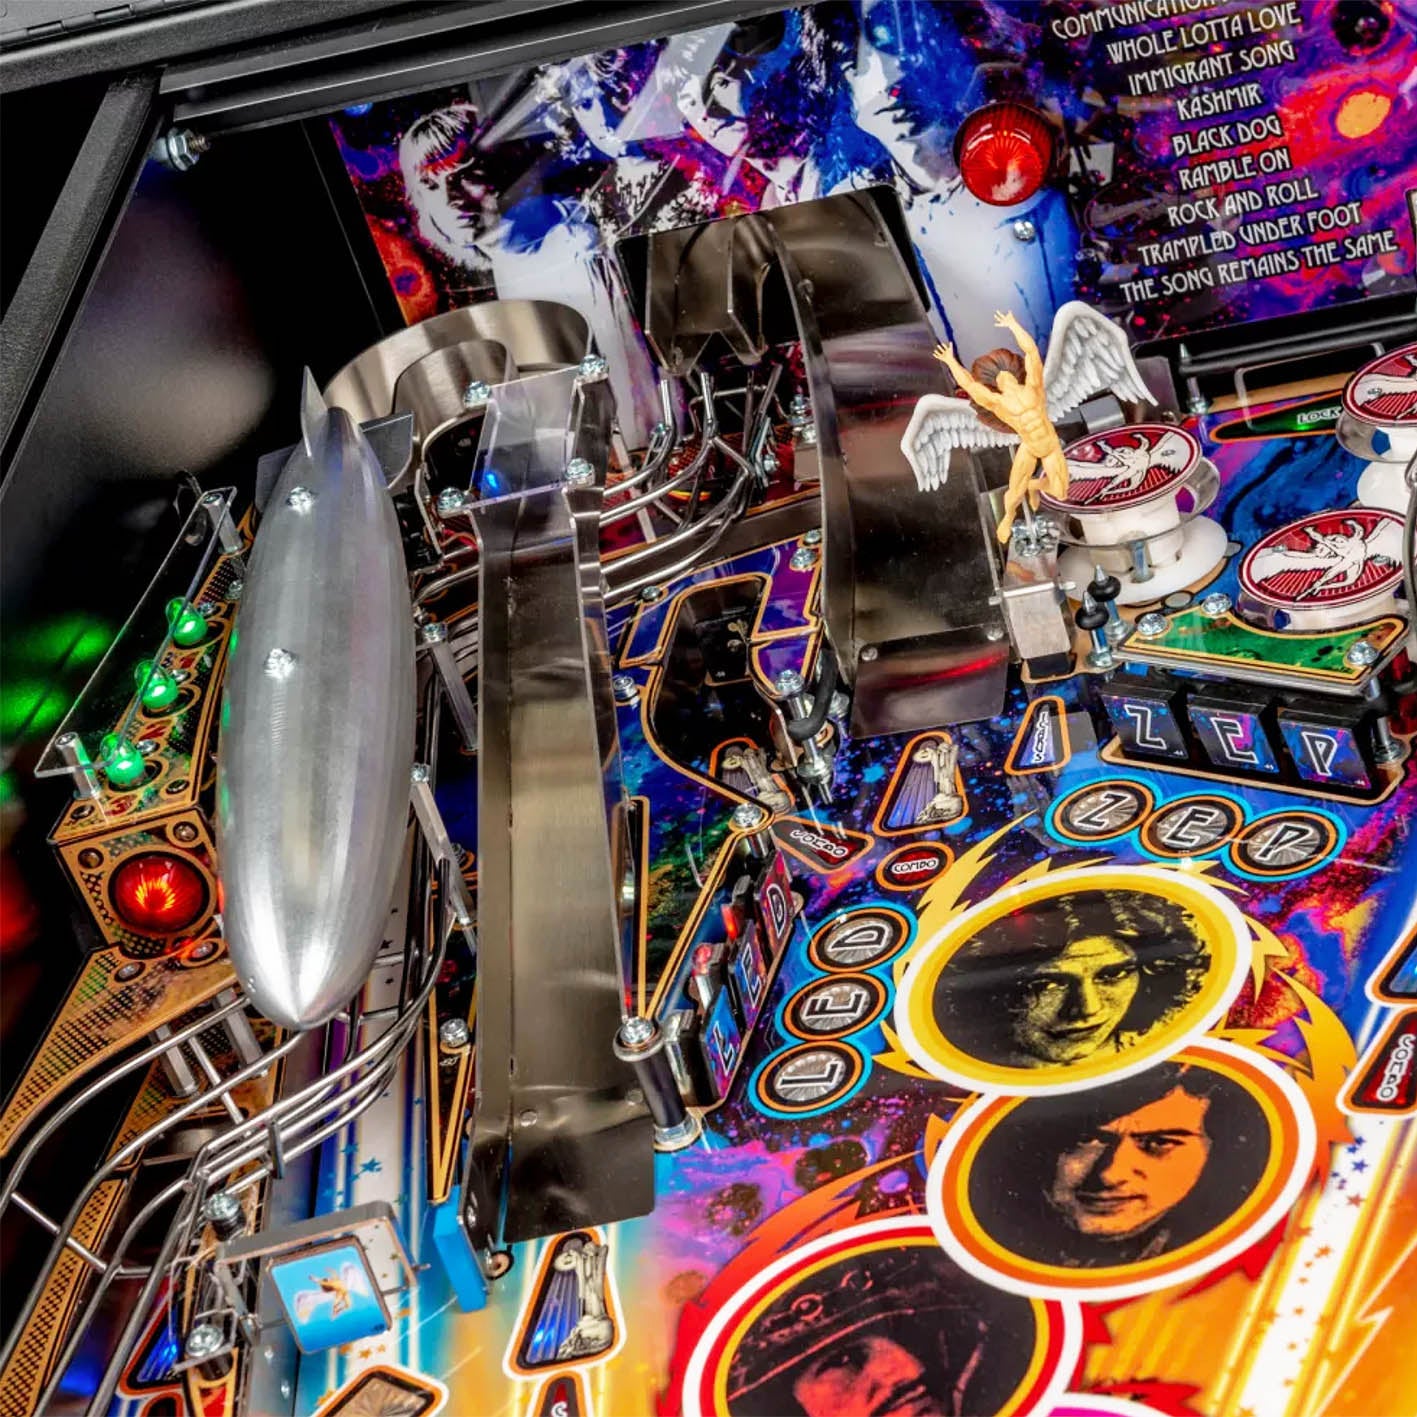 2020 Led Zeppelin Pro Pinball Machine by Stern